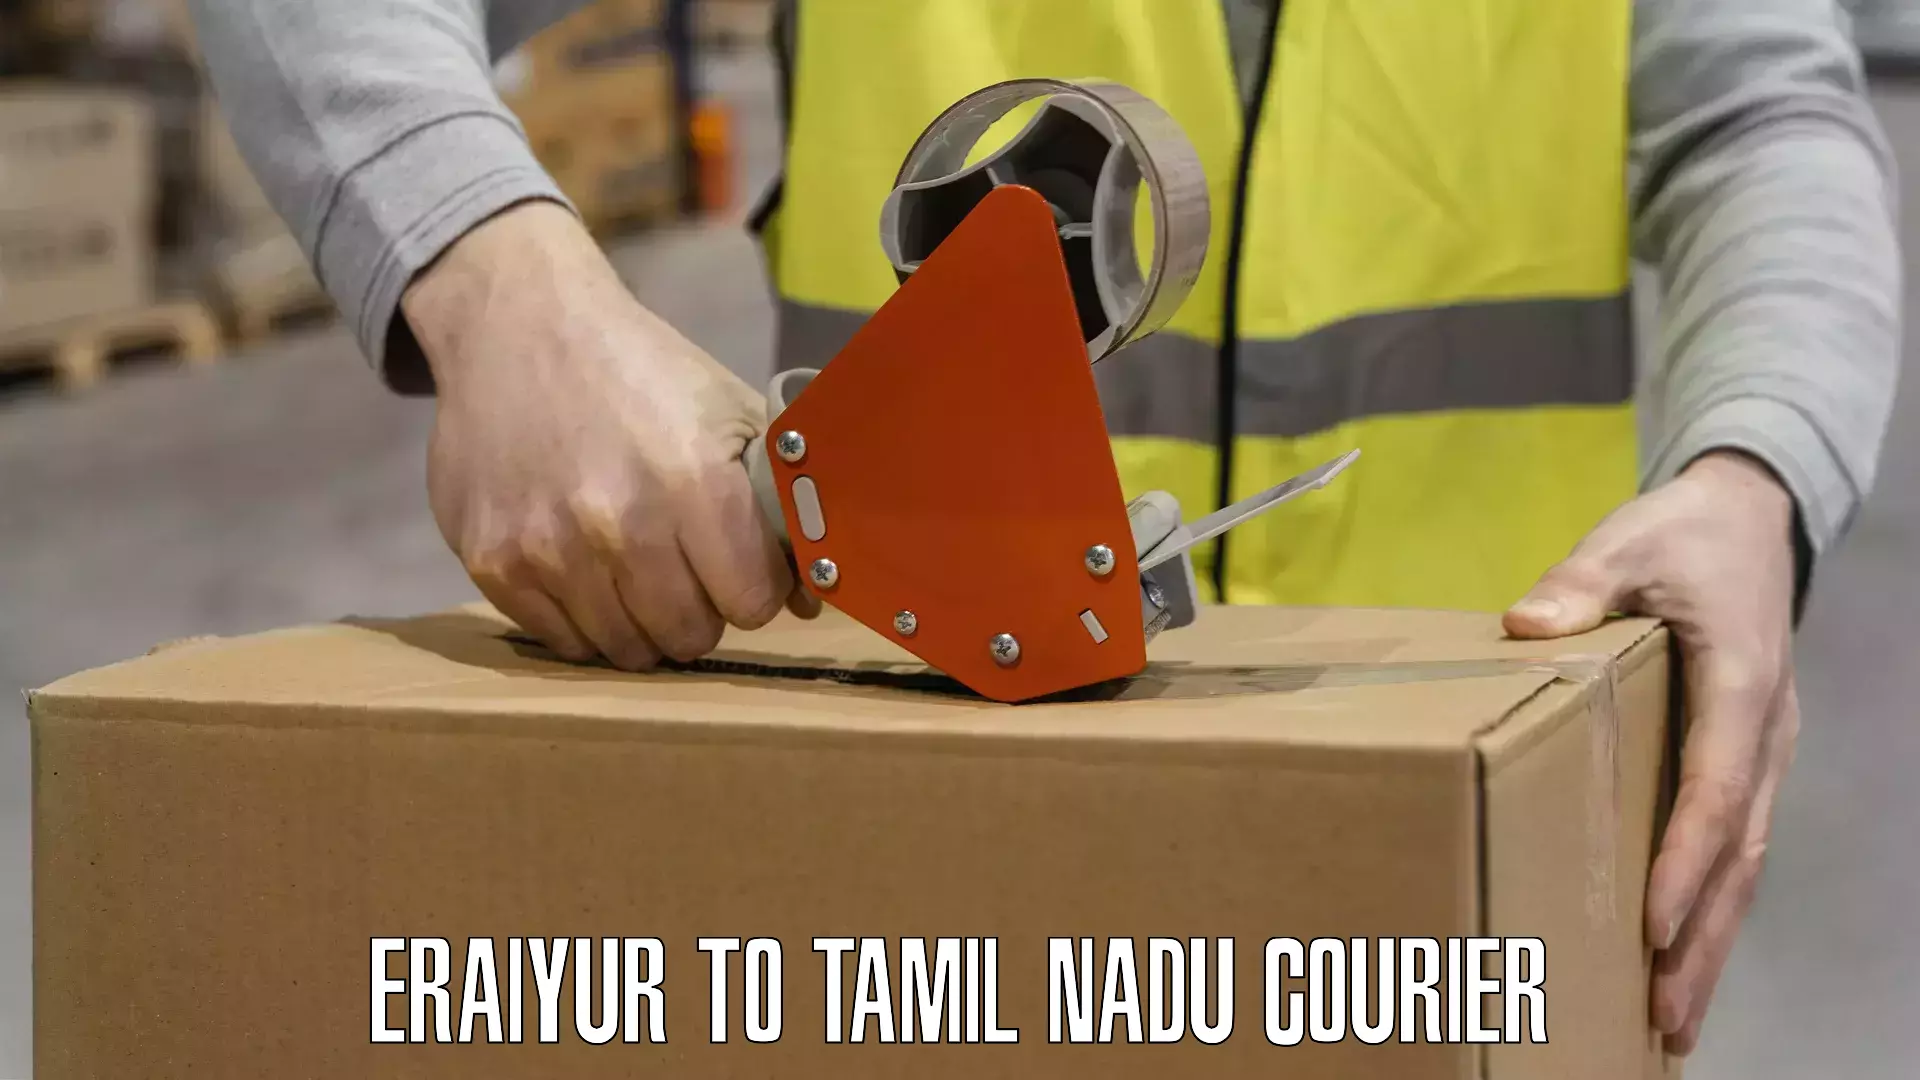 Courier service innovation Eraiyur to Tamil Nadu